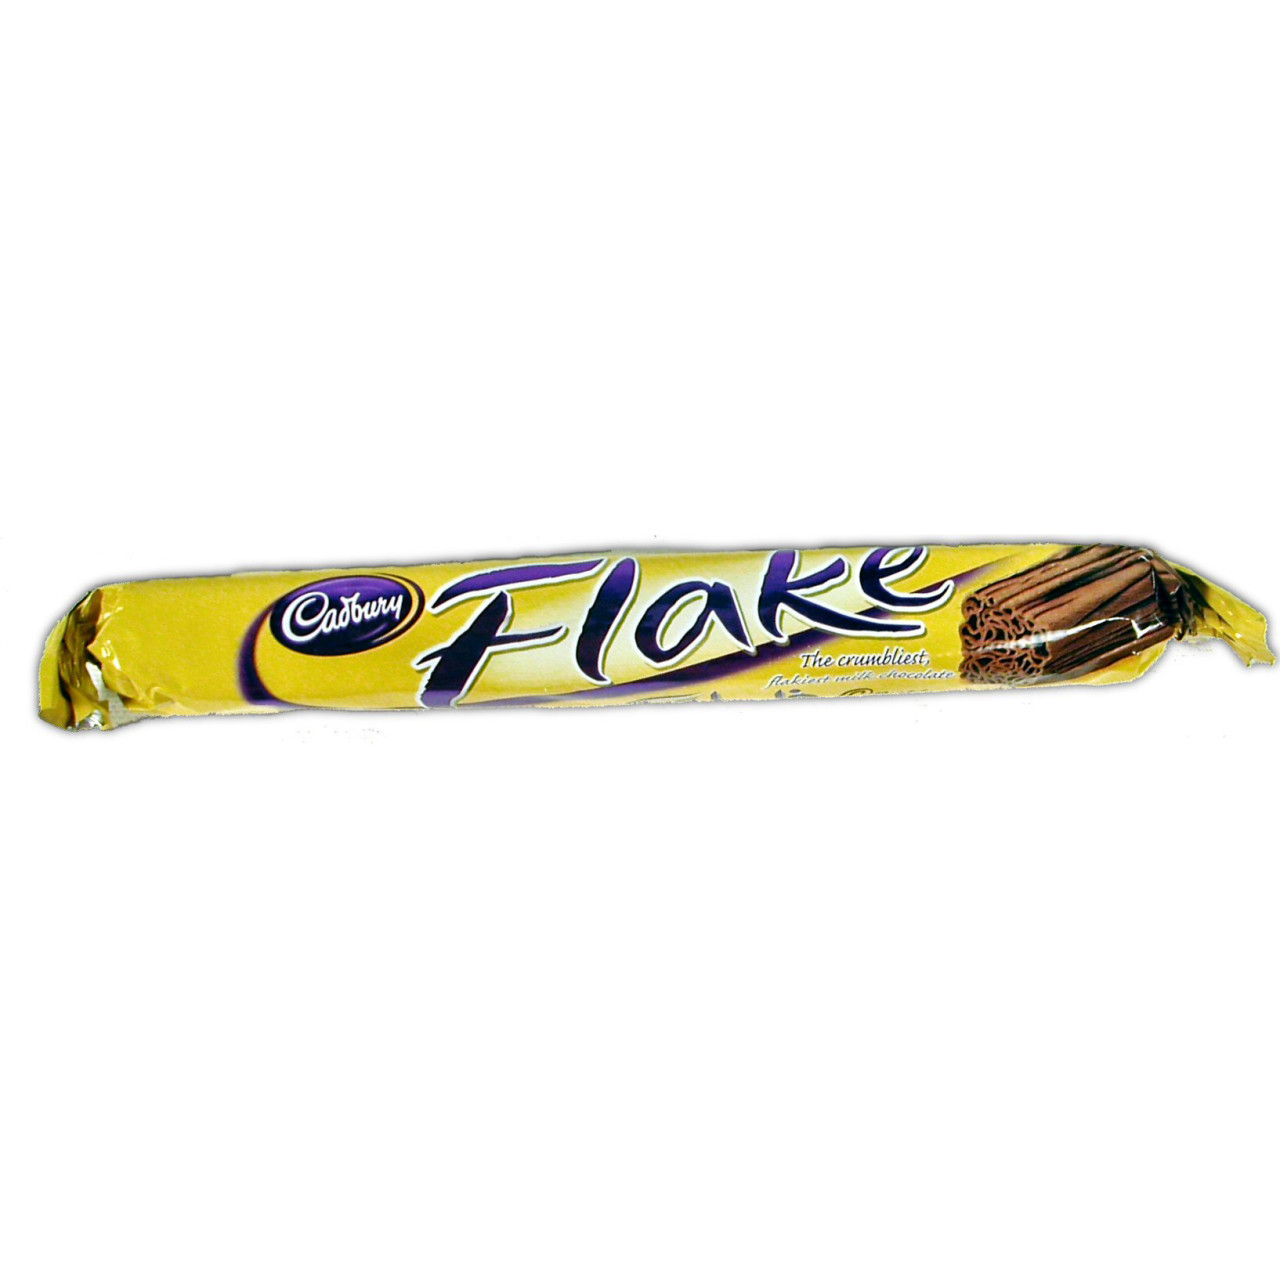 Cadbury Flake Chocolate🍫 Review, Ingredients, Taste, Price, Ad, Cadbury  Flake